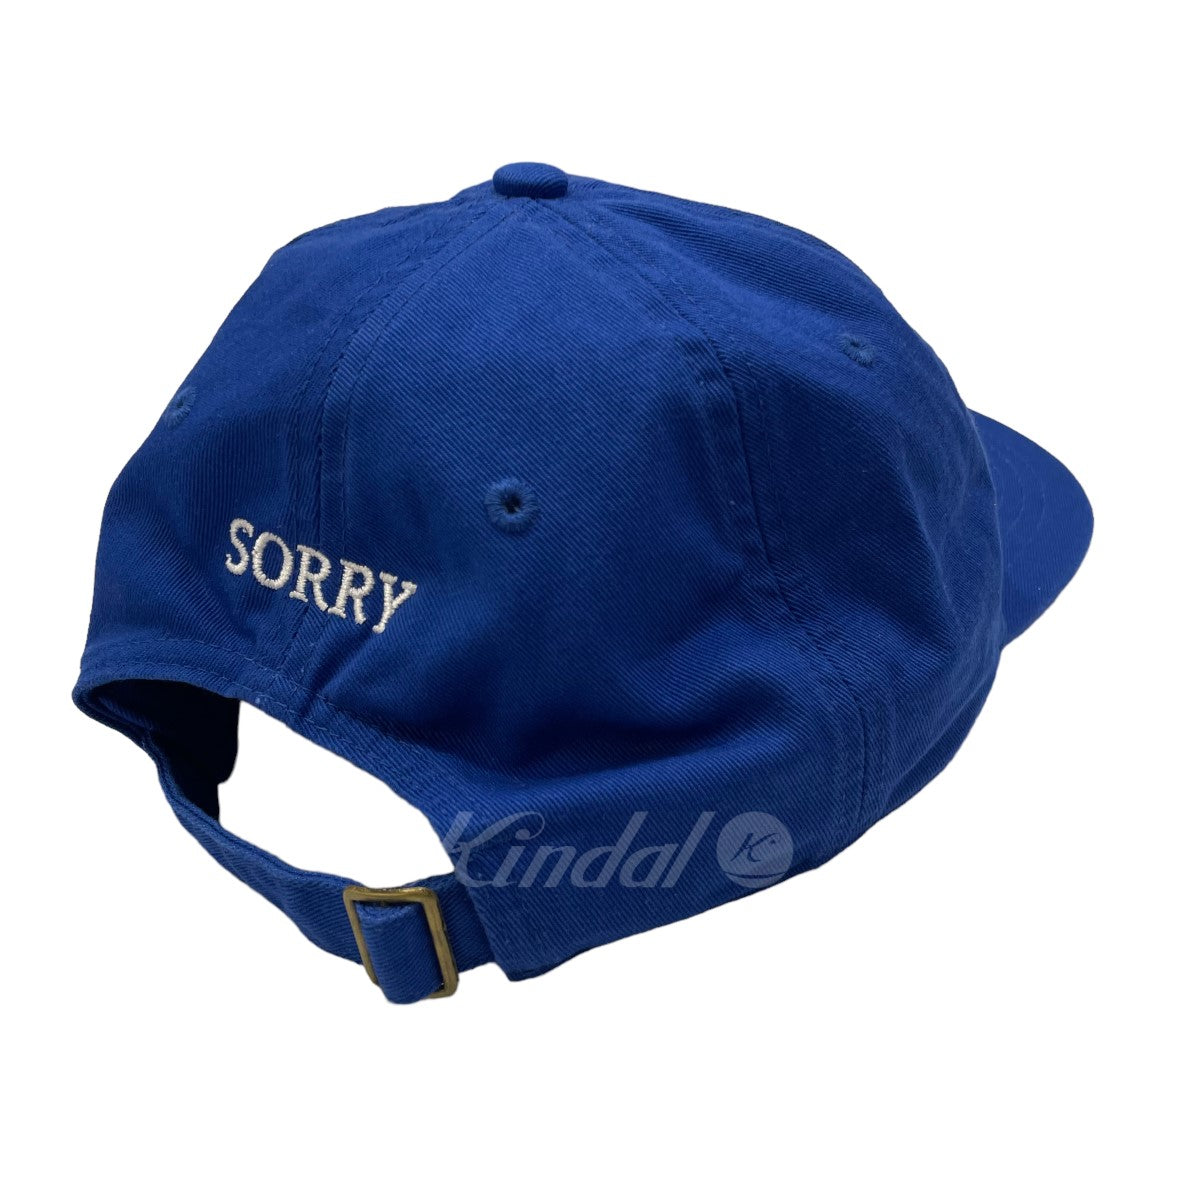 SORRY CAP BLUE